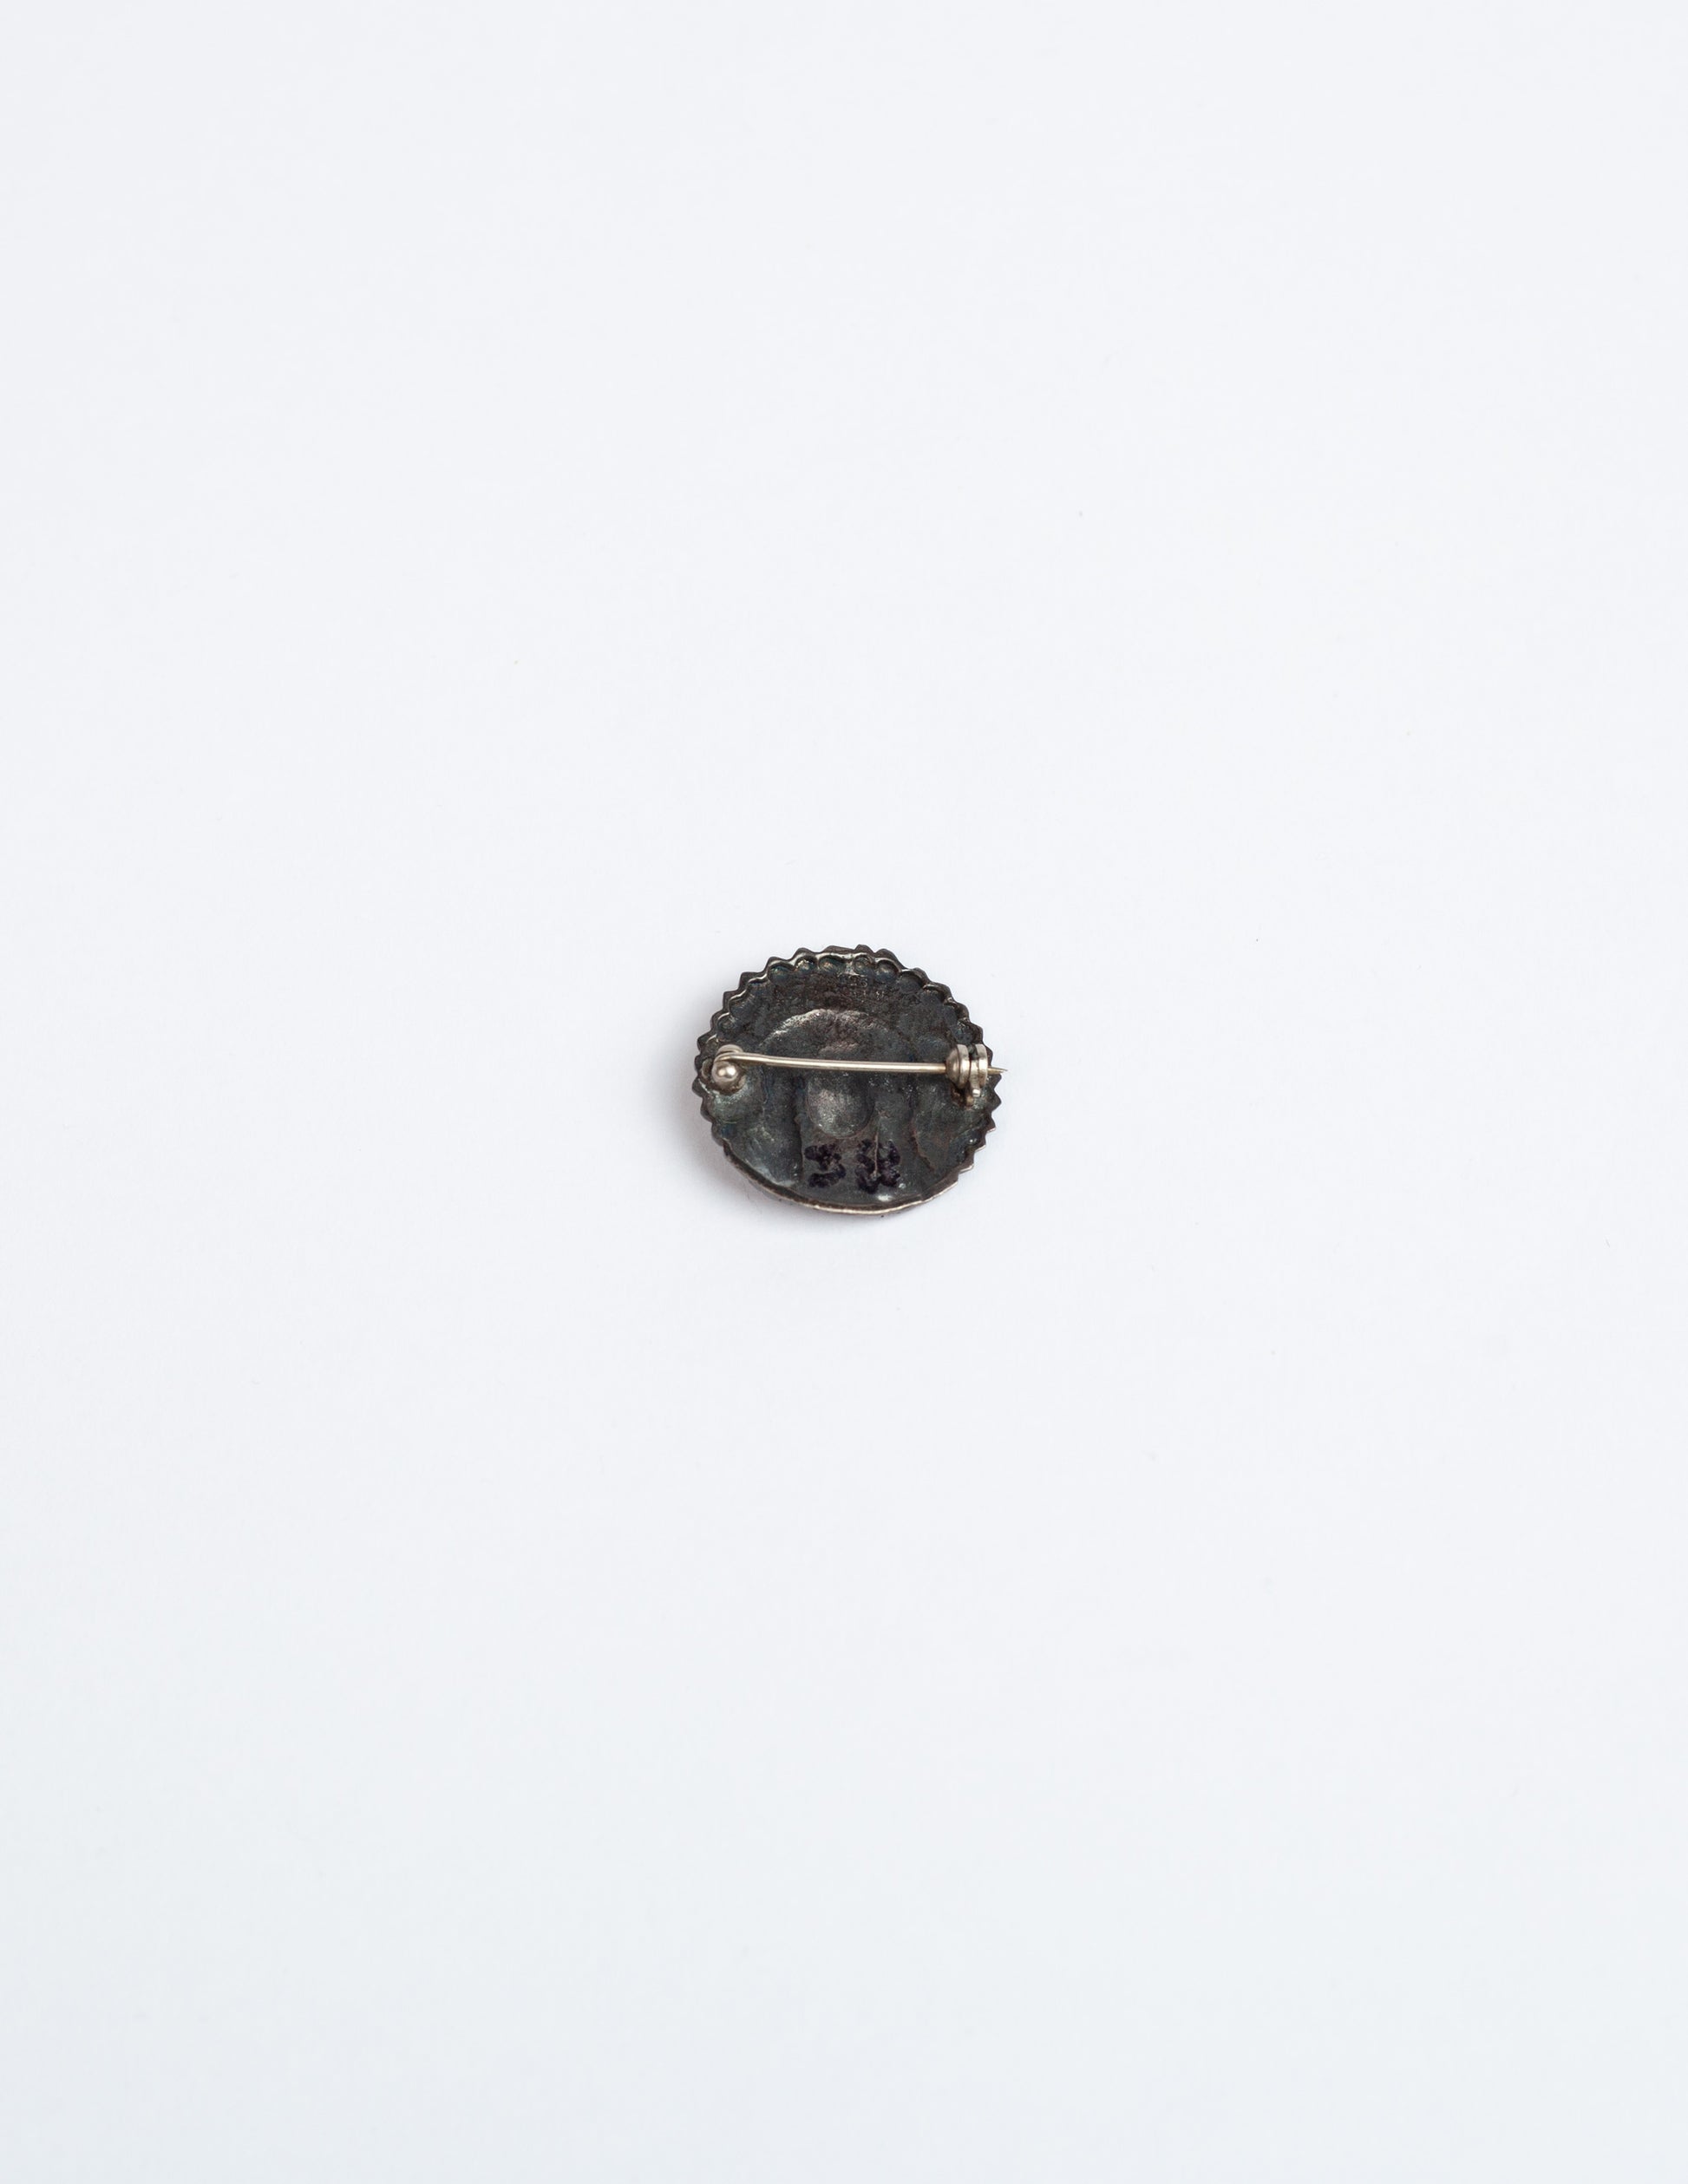 1900s Indian Head Pin